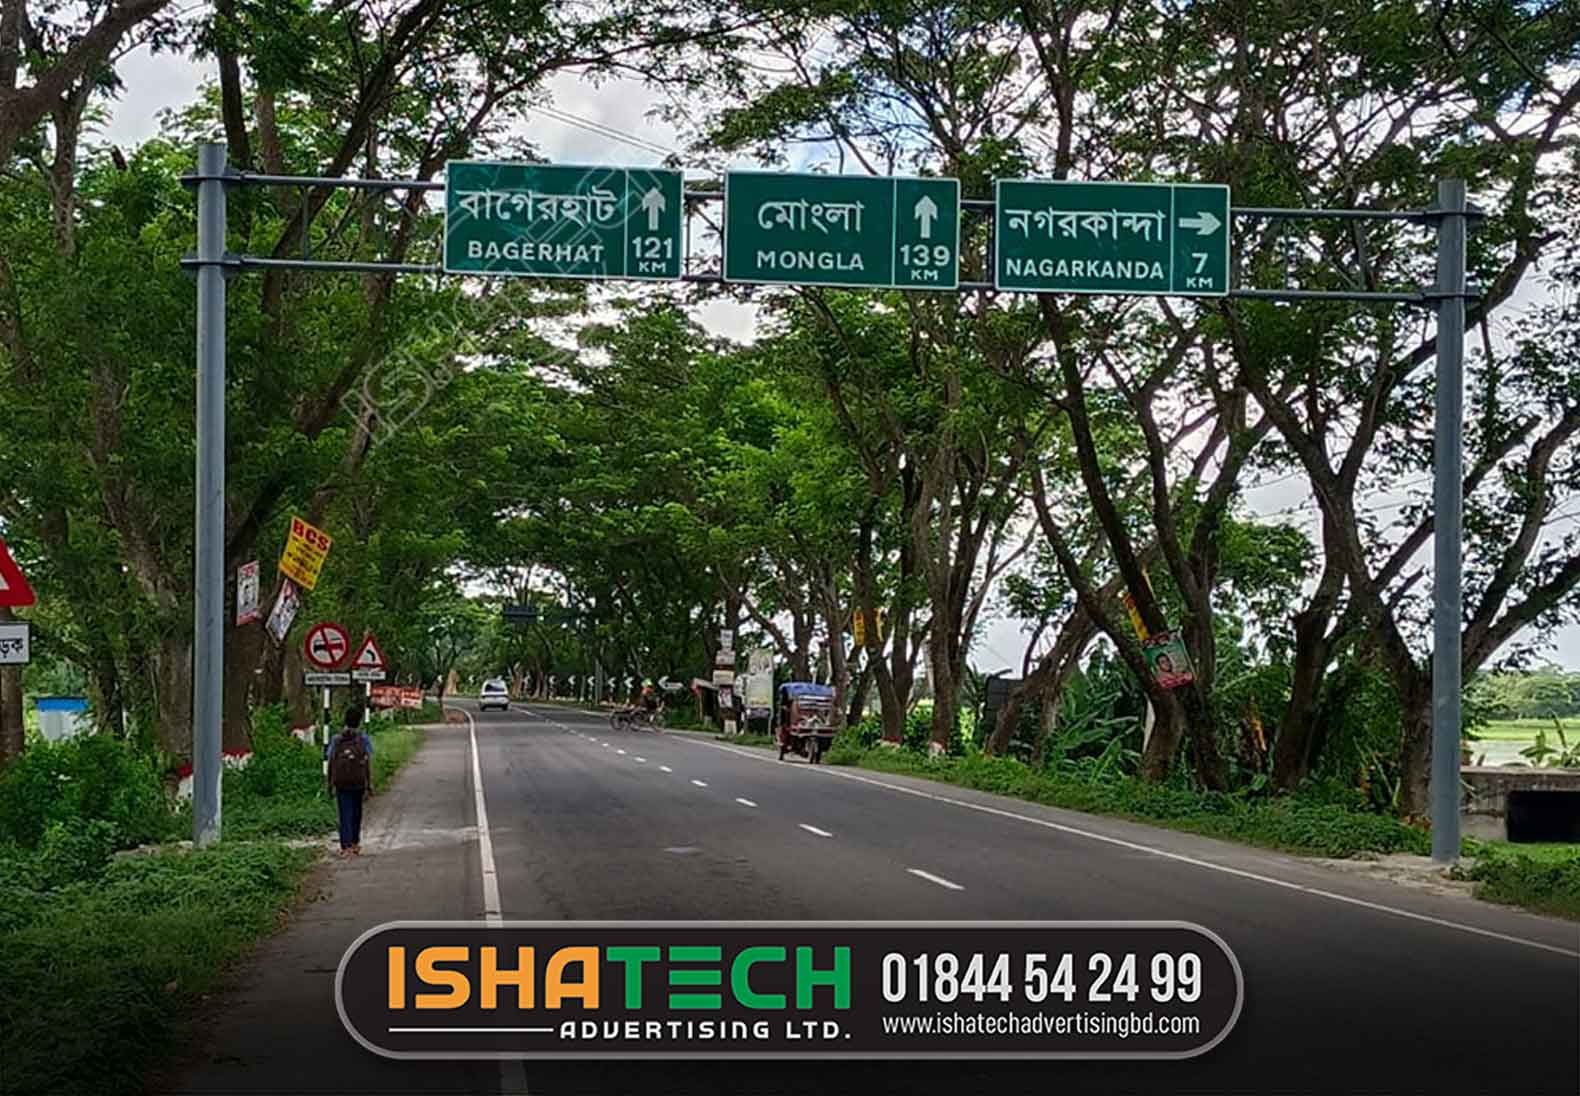 BAGERHAT, MONGLA, NOGORKANDA ROAD AND HIGHWAY DIRECTIONAL BILLBOARD MAKING IN DHAKA, BANGLADESH